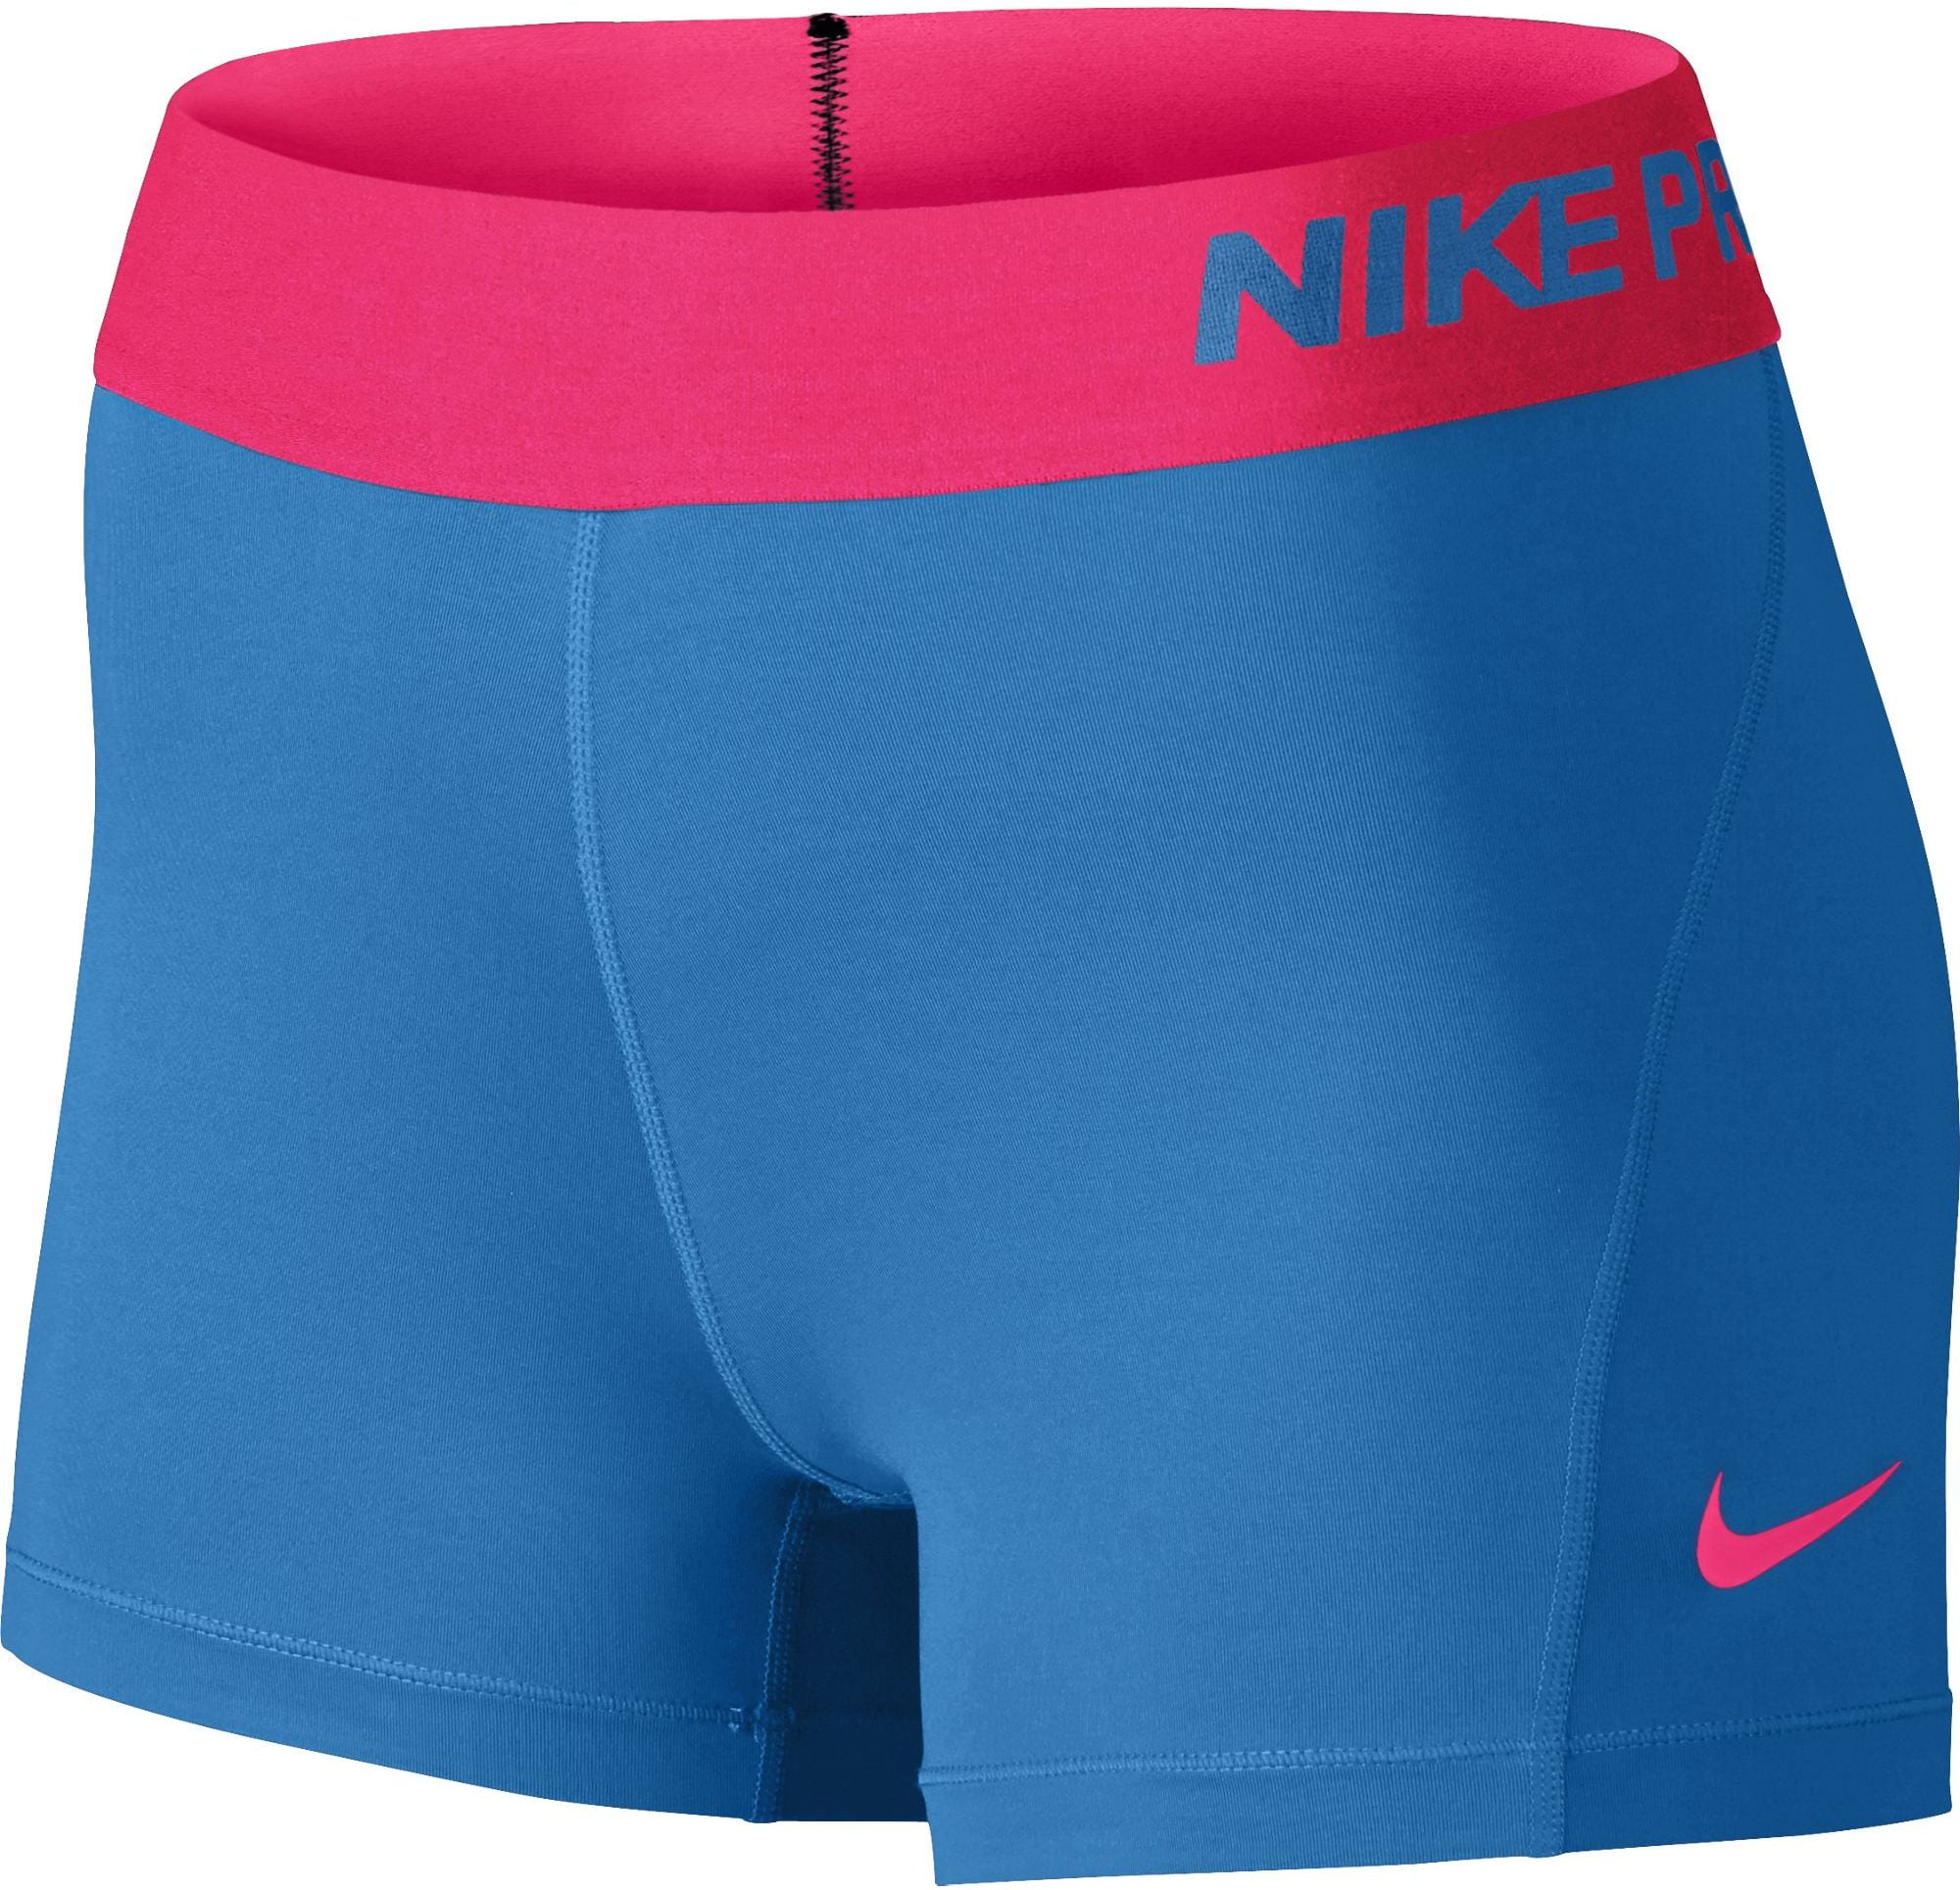 blue nike compression shorts